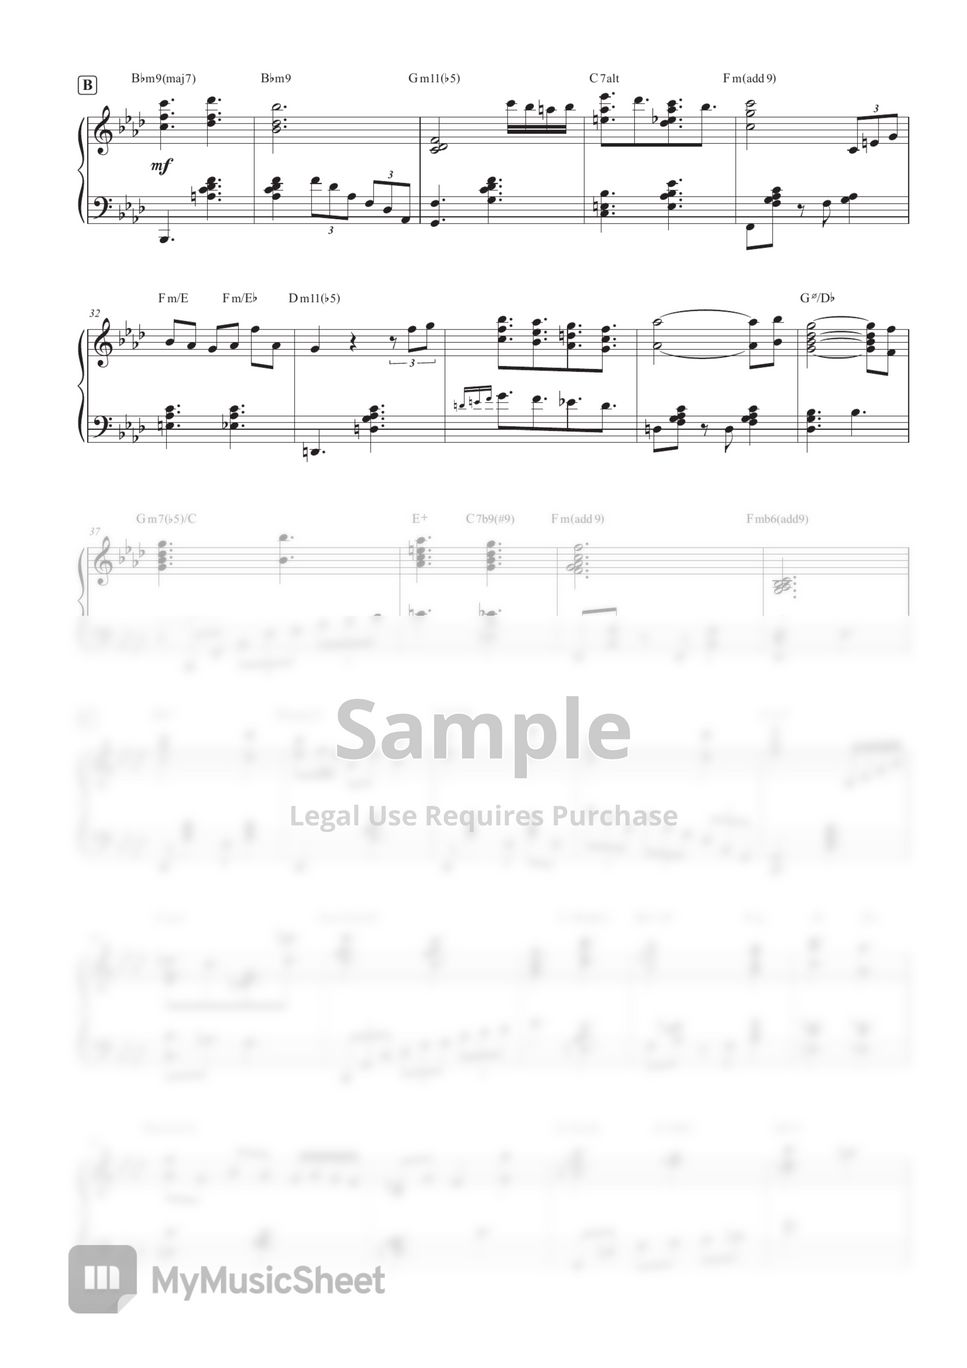 Henry Mancini - Loss of Love (Sunflower Theme) as a jazz waltz (Jazz Waltz Arrangement) by Jacob Koller